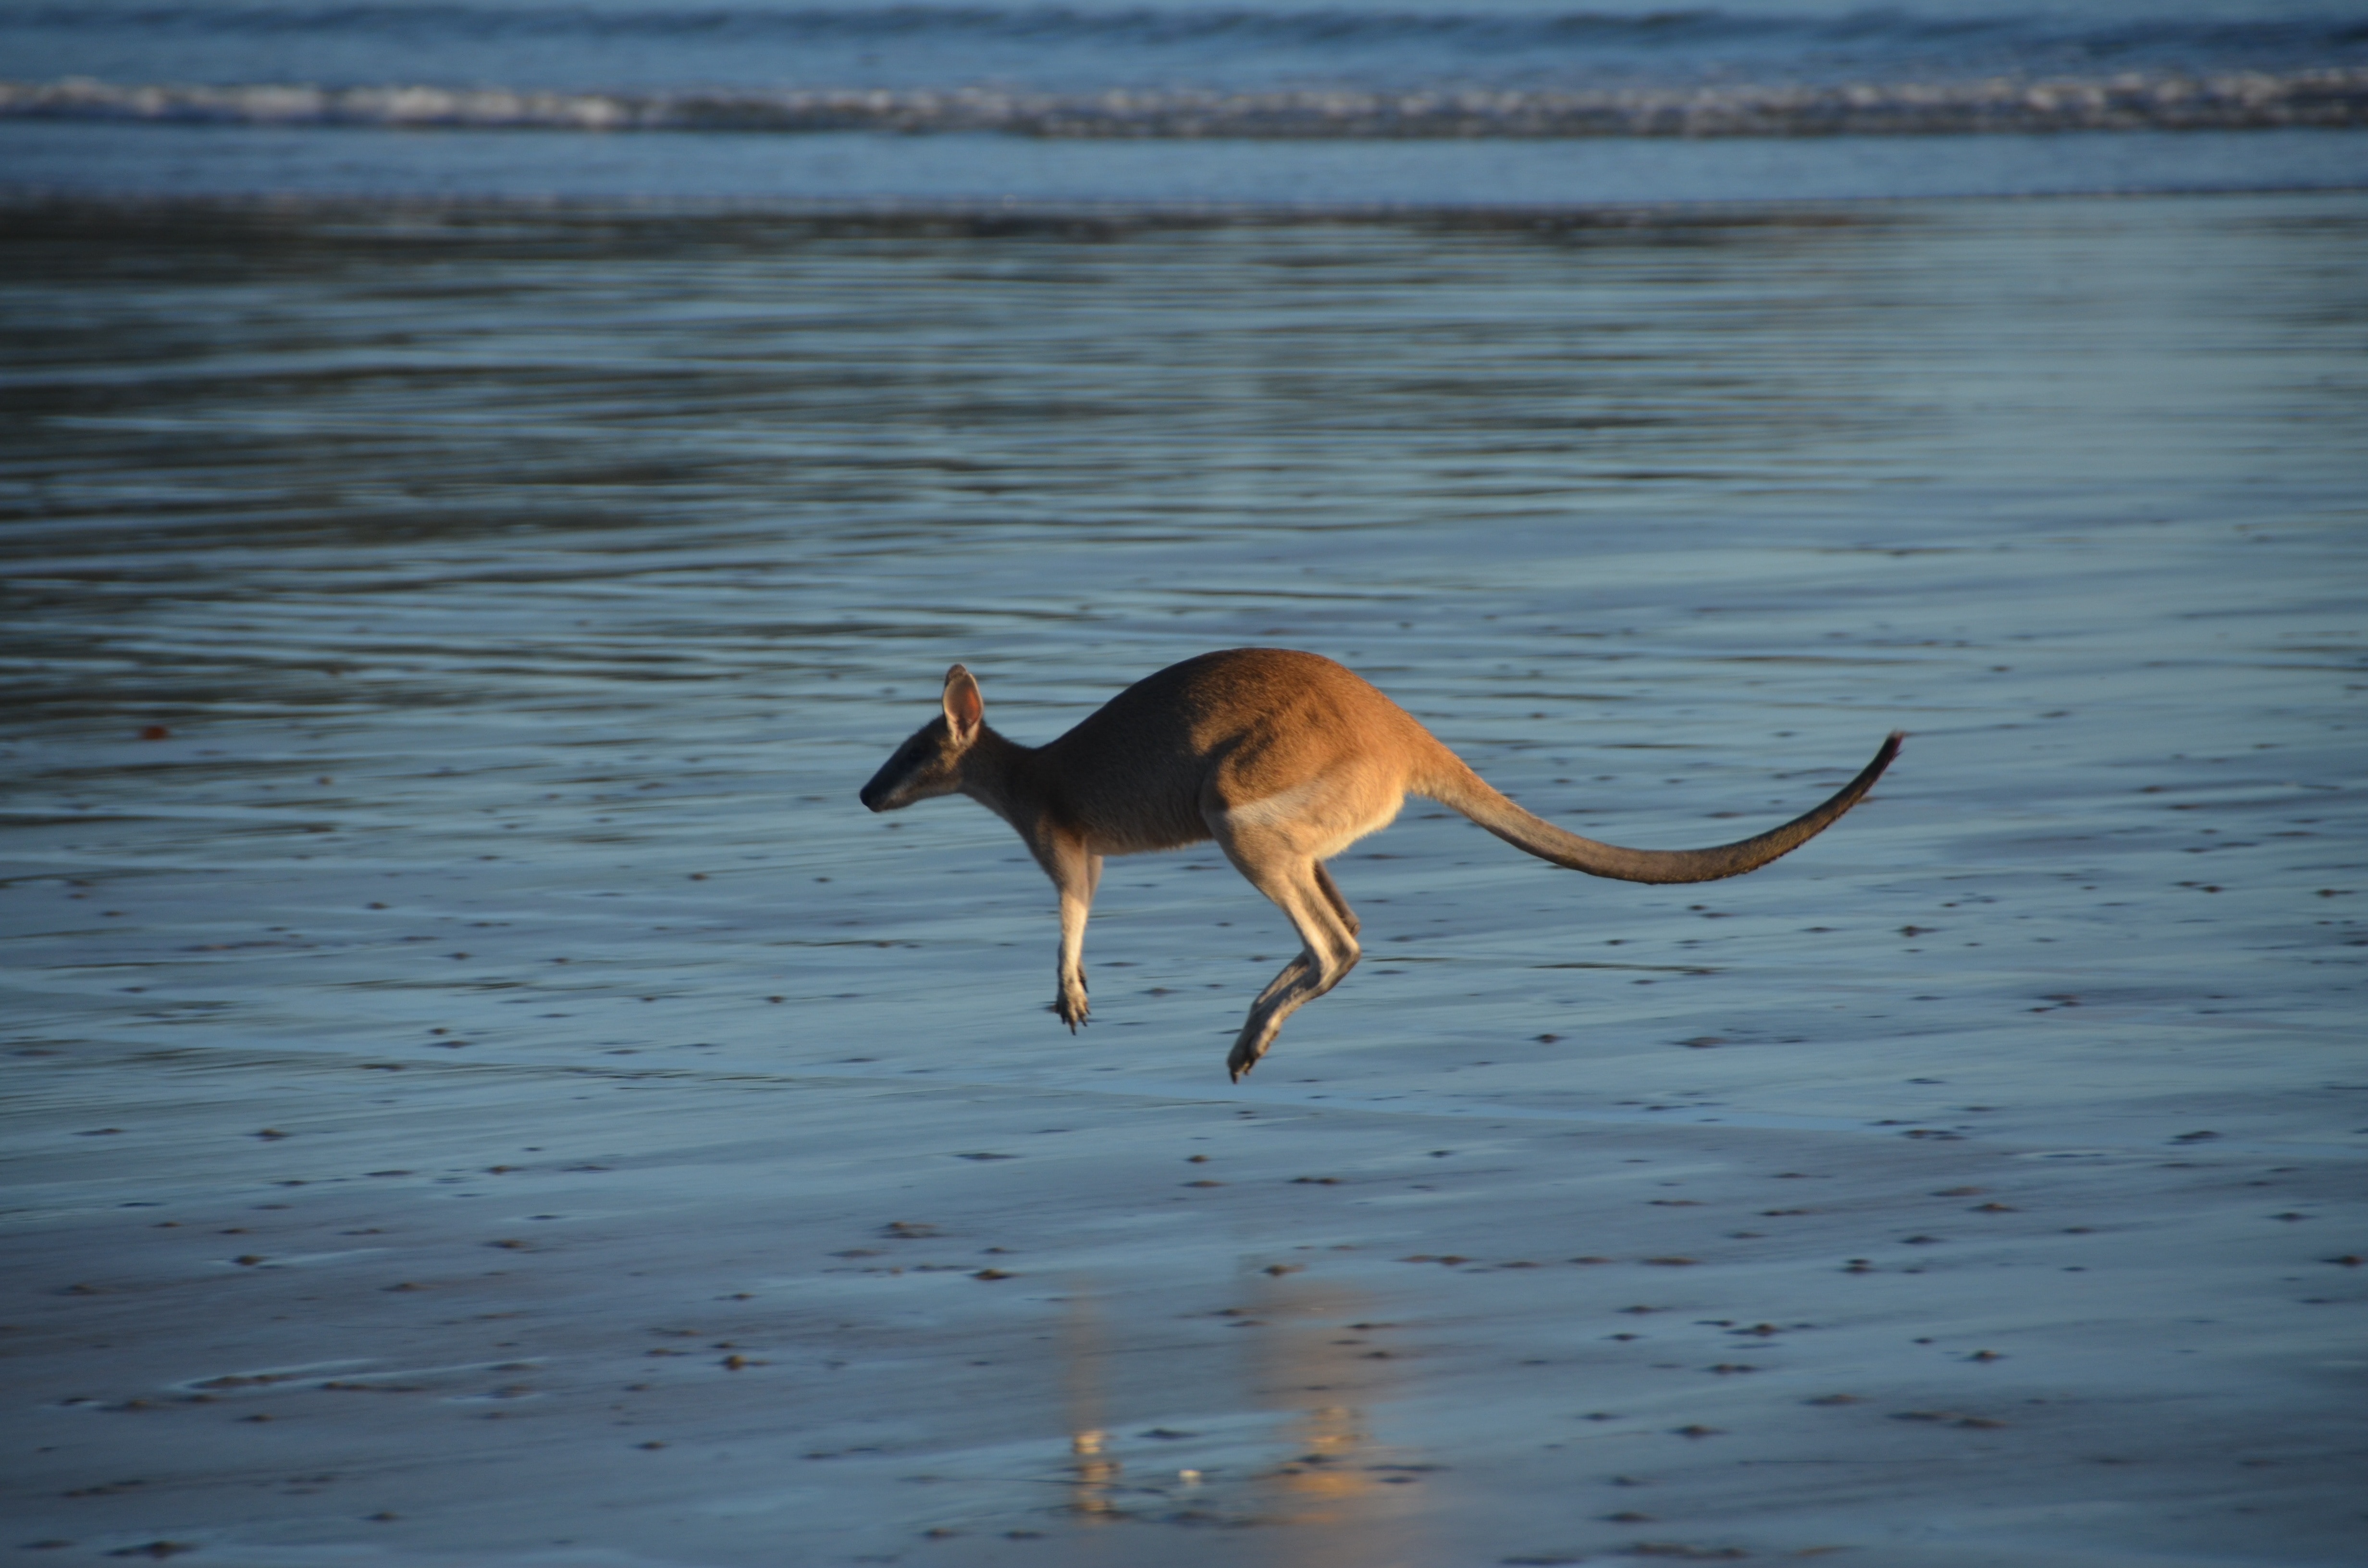 kangaroo in flight above wet sand near body of water during daytime